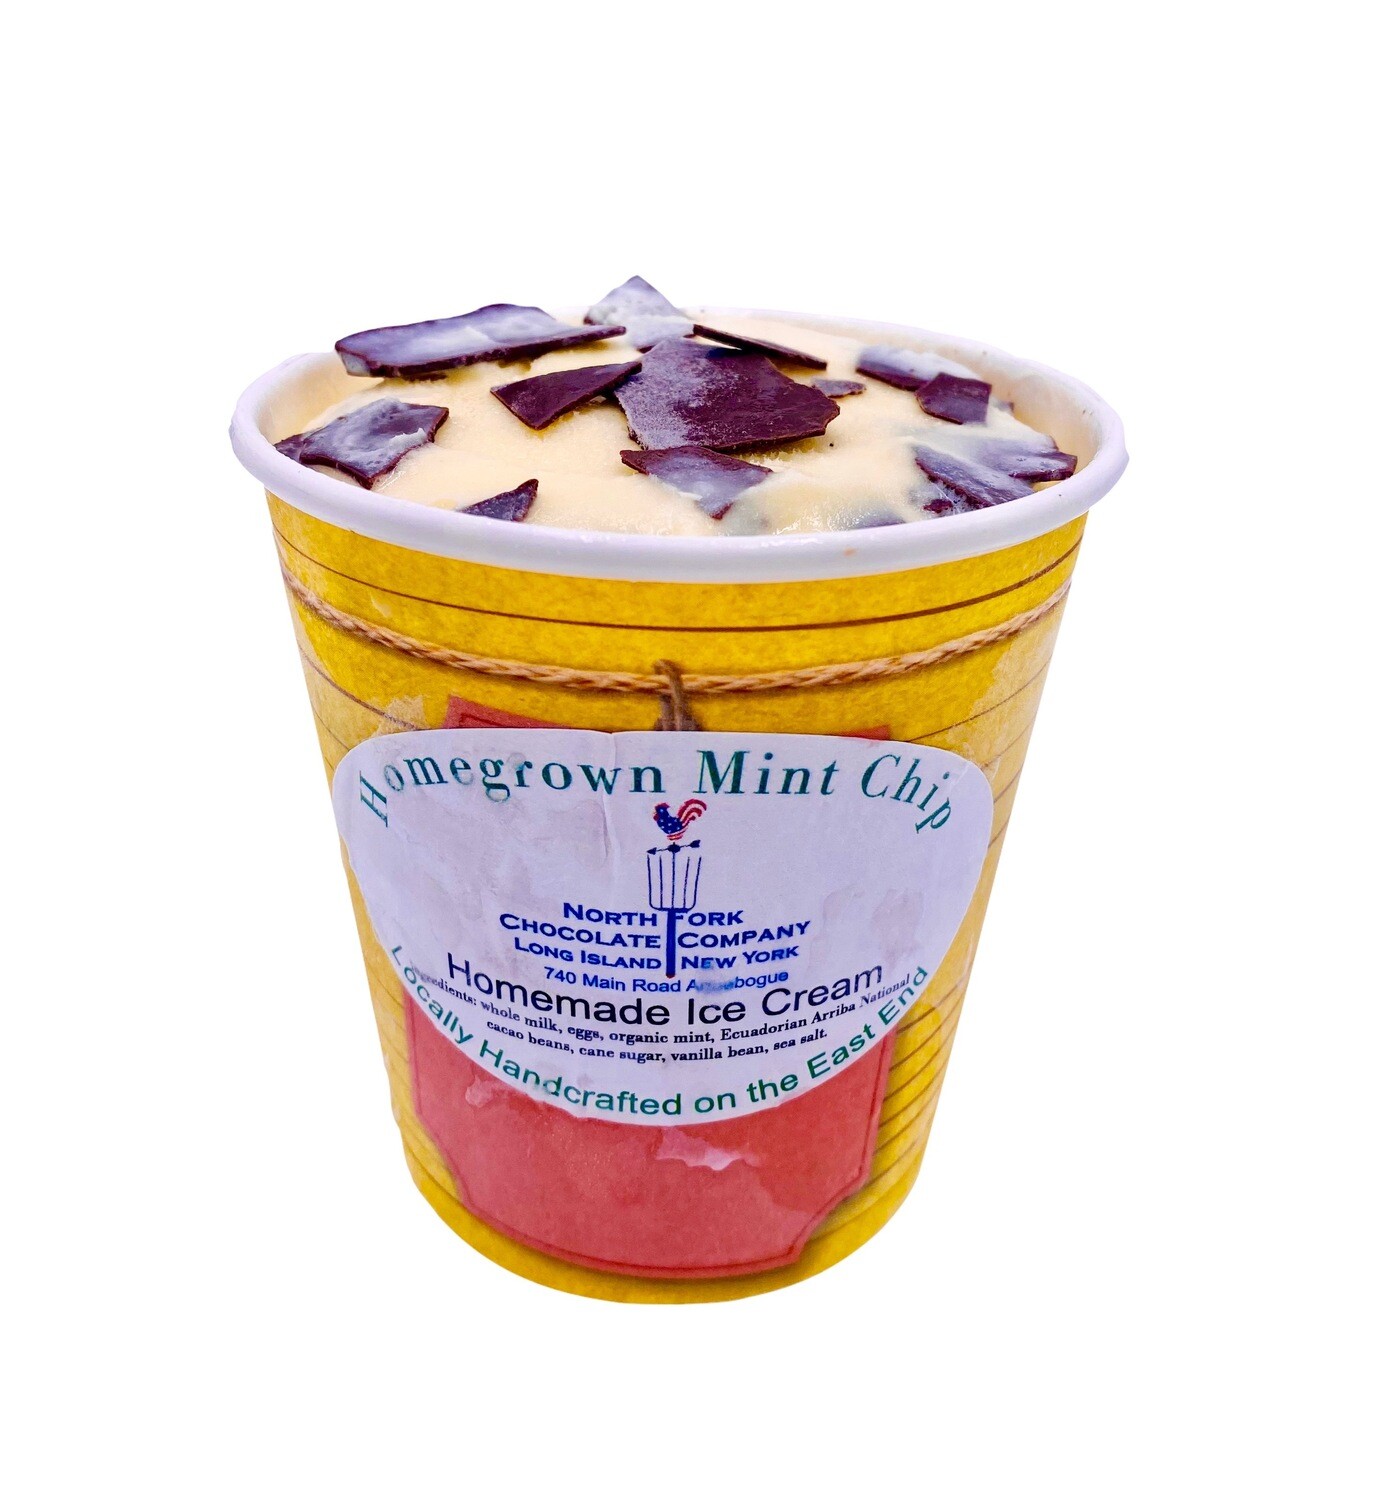 Homegrown Mint Chip Ice Cream - Pint